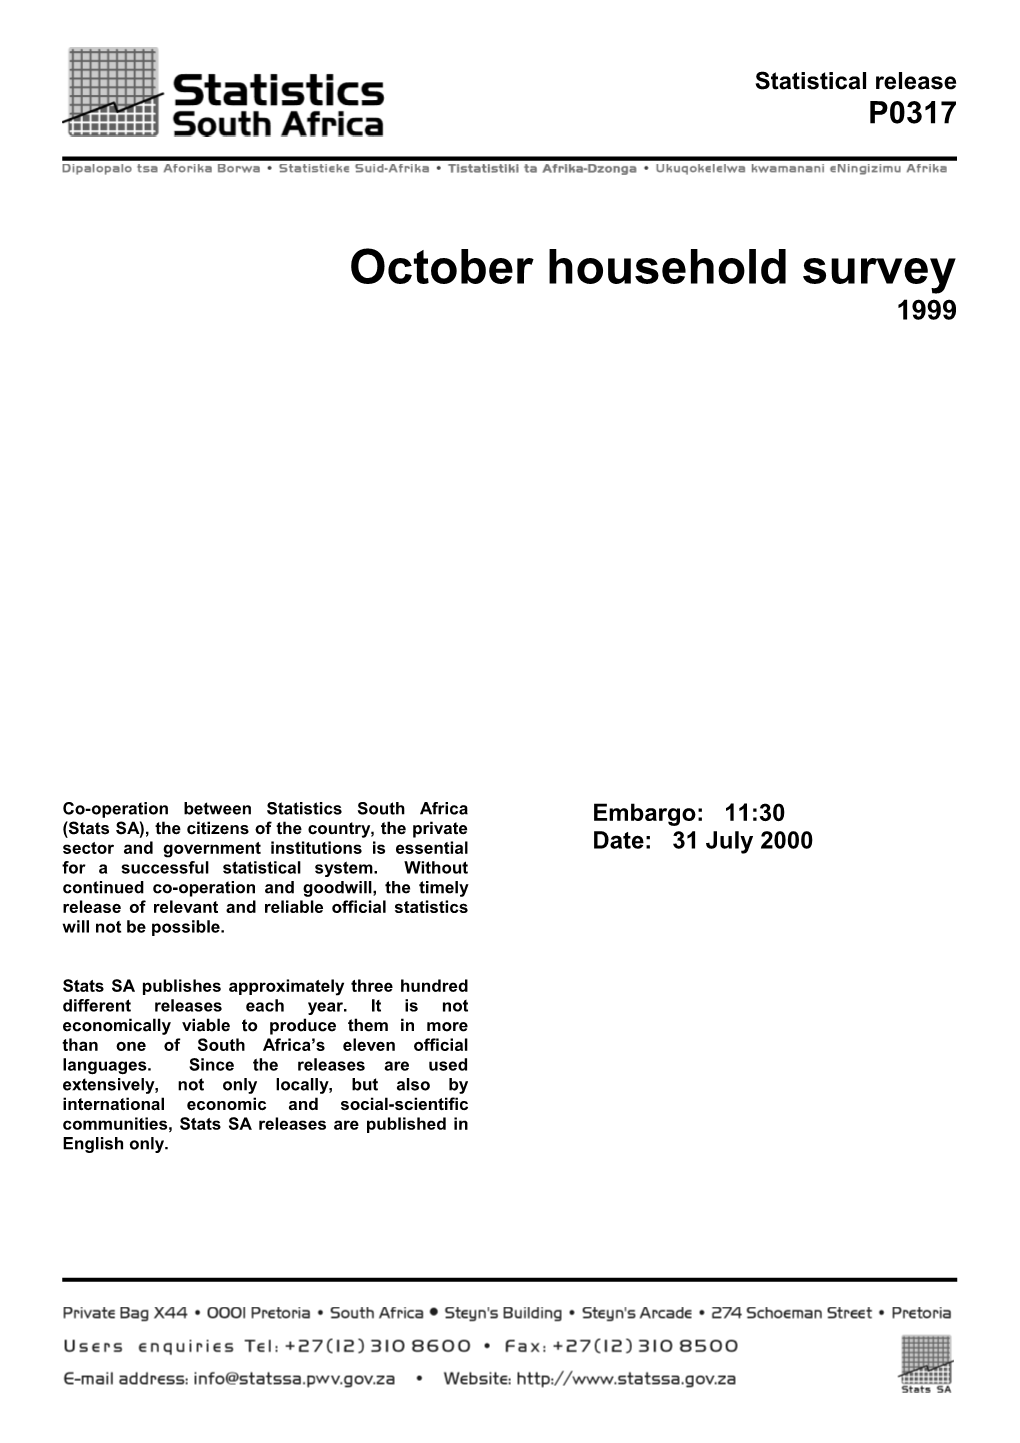 October Household Survey